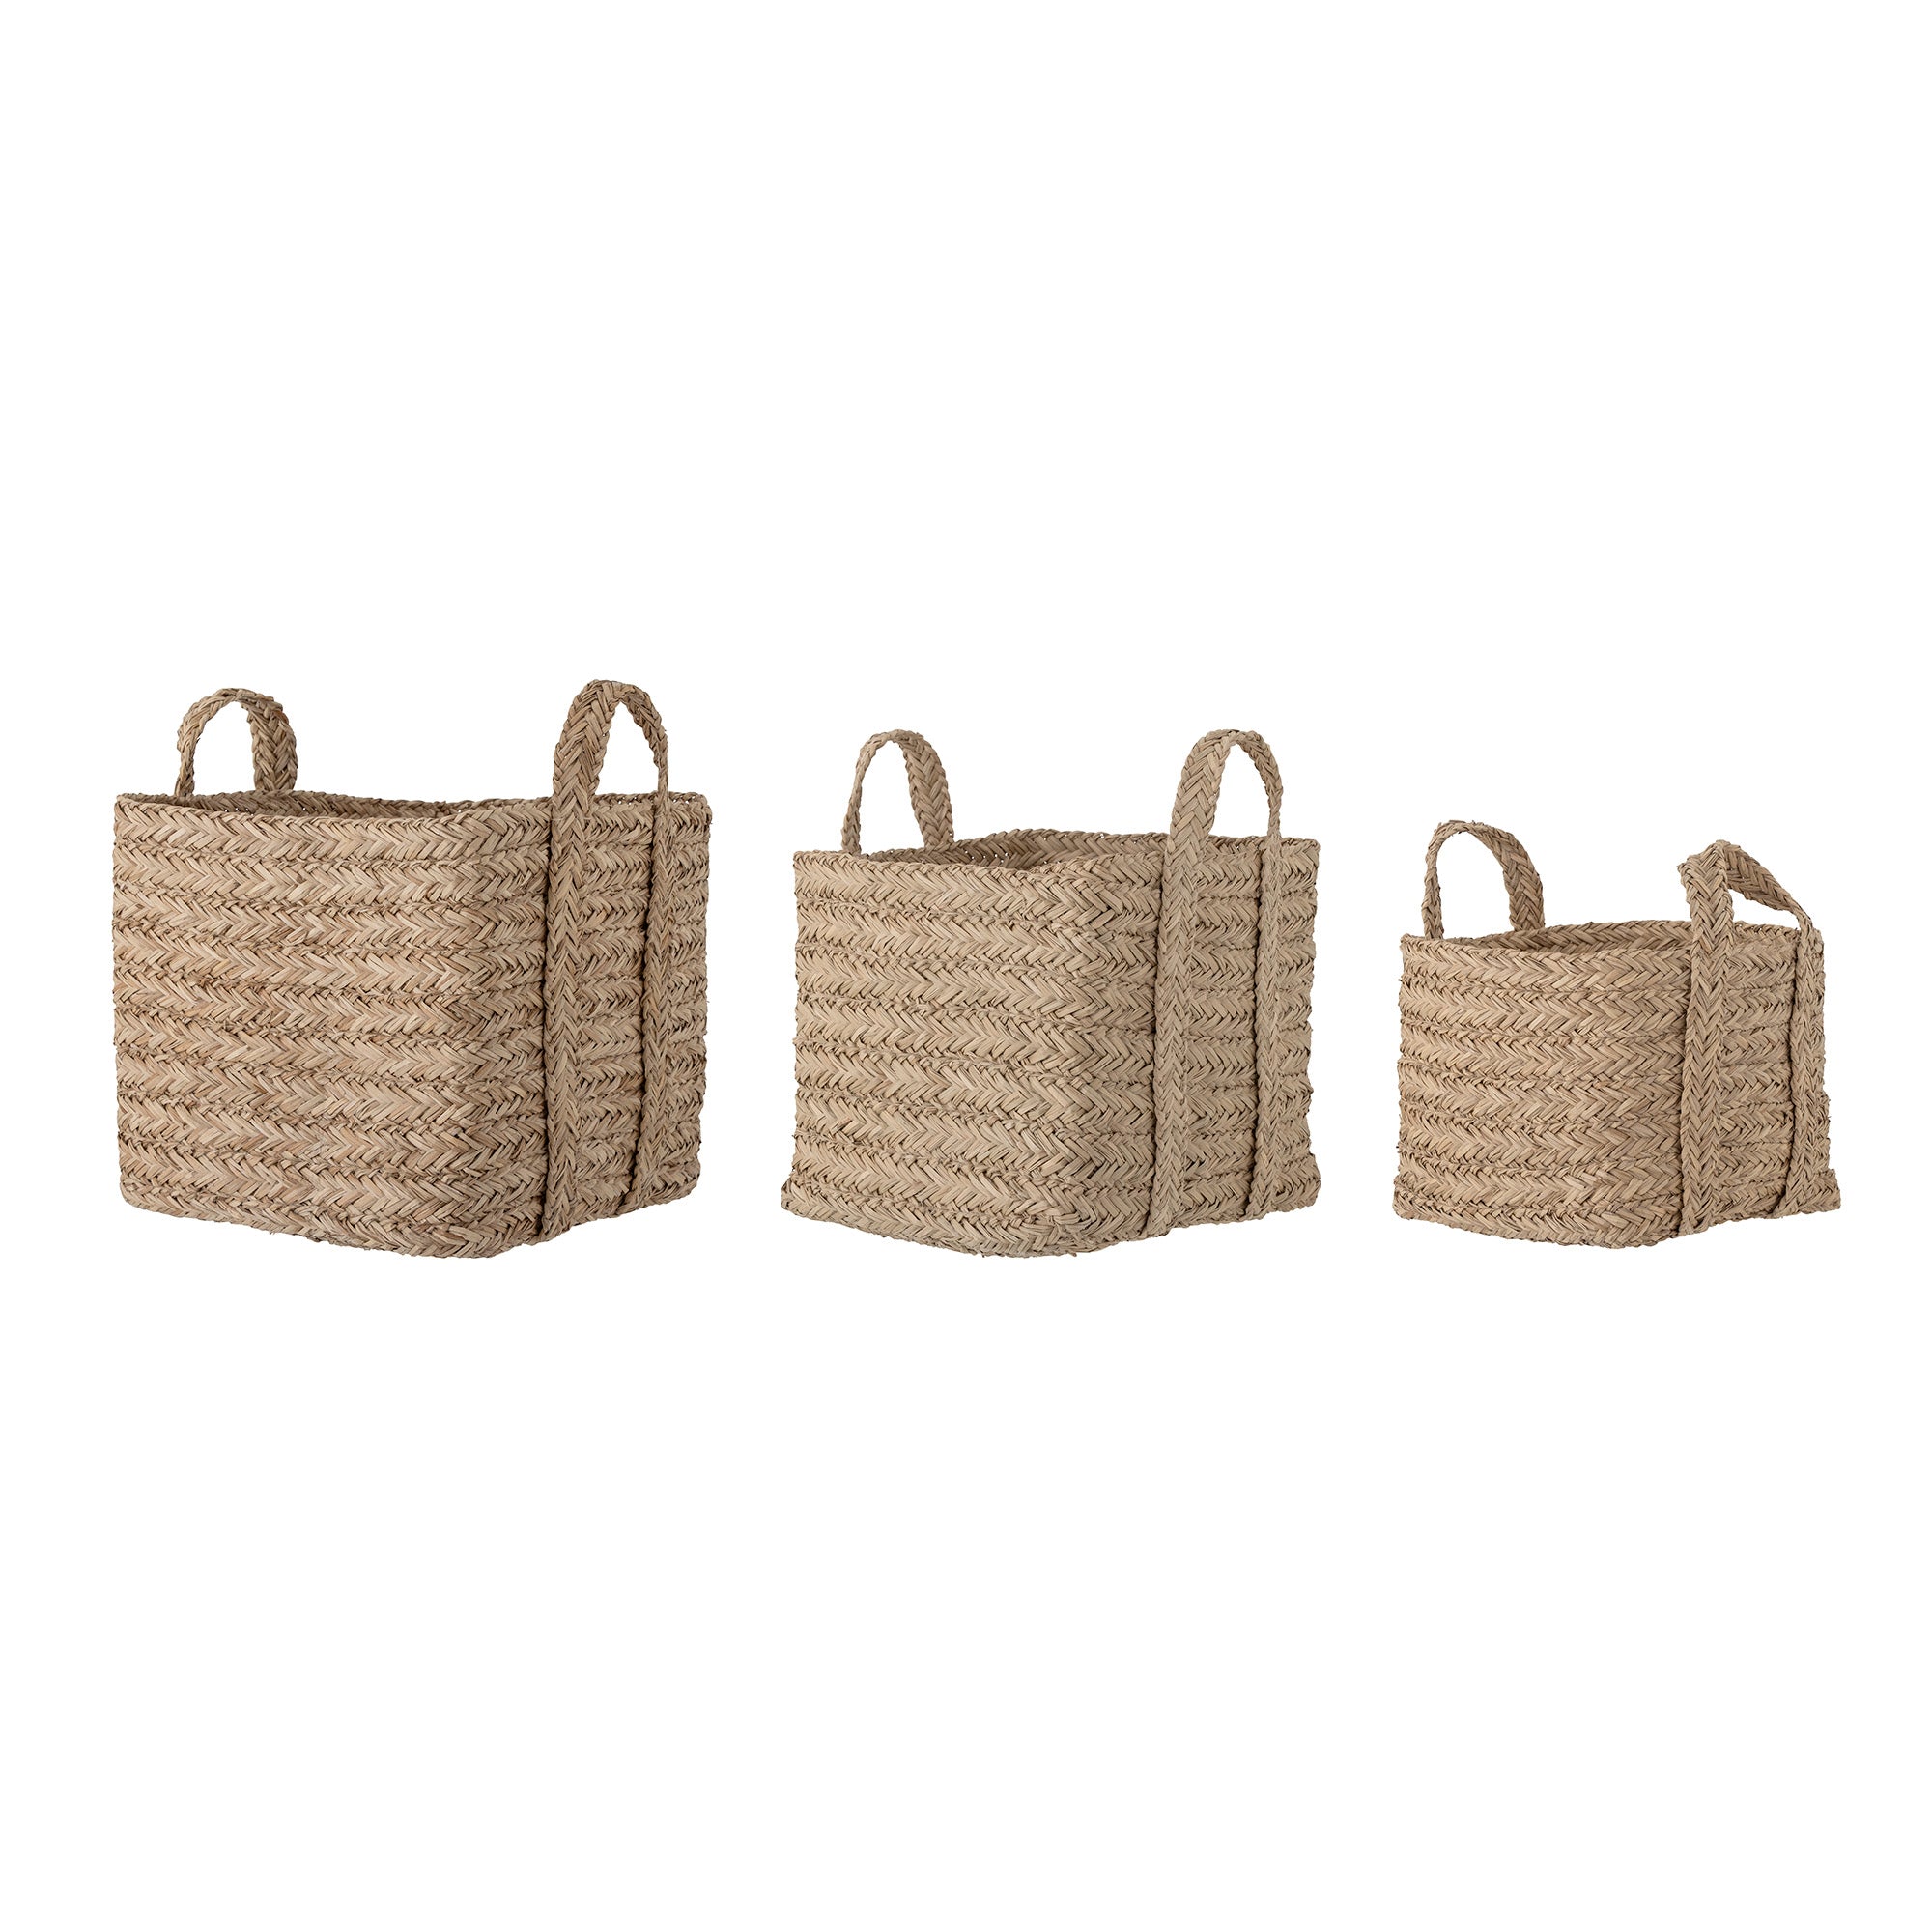 Kayes baskets - set of 3